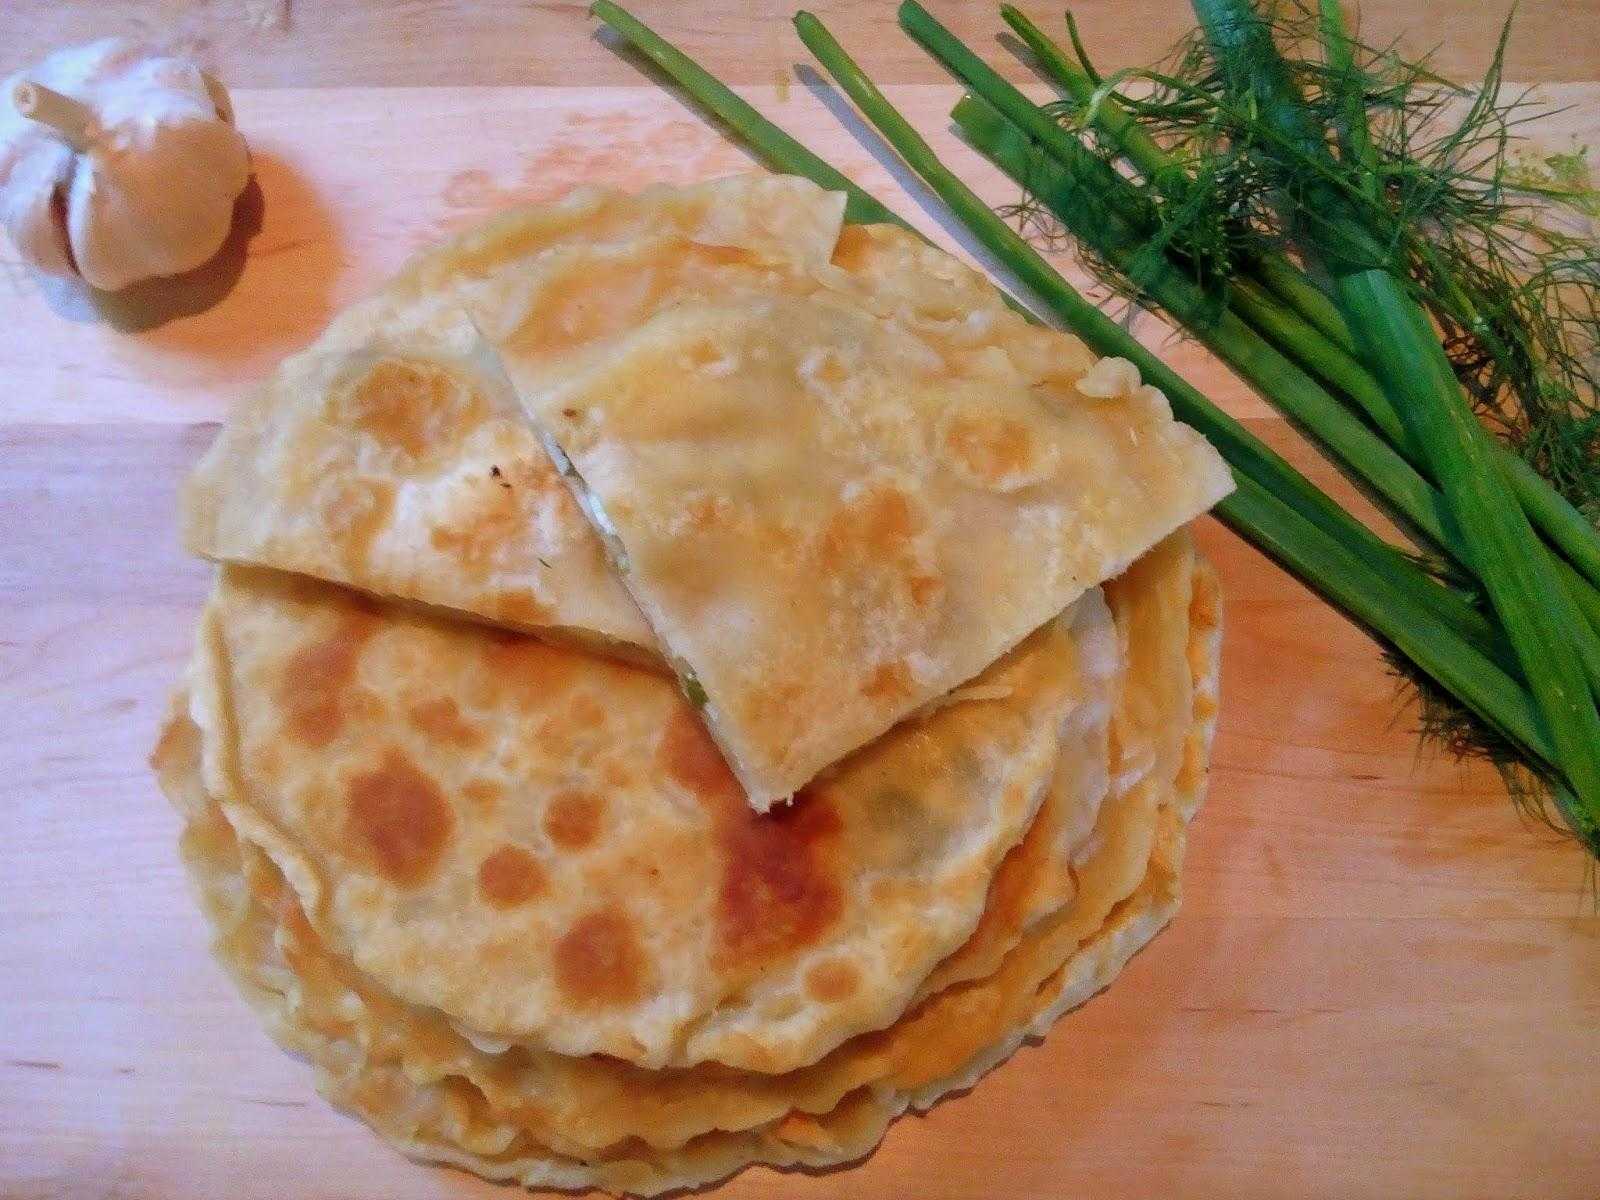 Армянский хлеб с зеленью – женгялов хац (armenian bread with herbs)